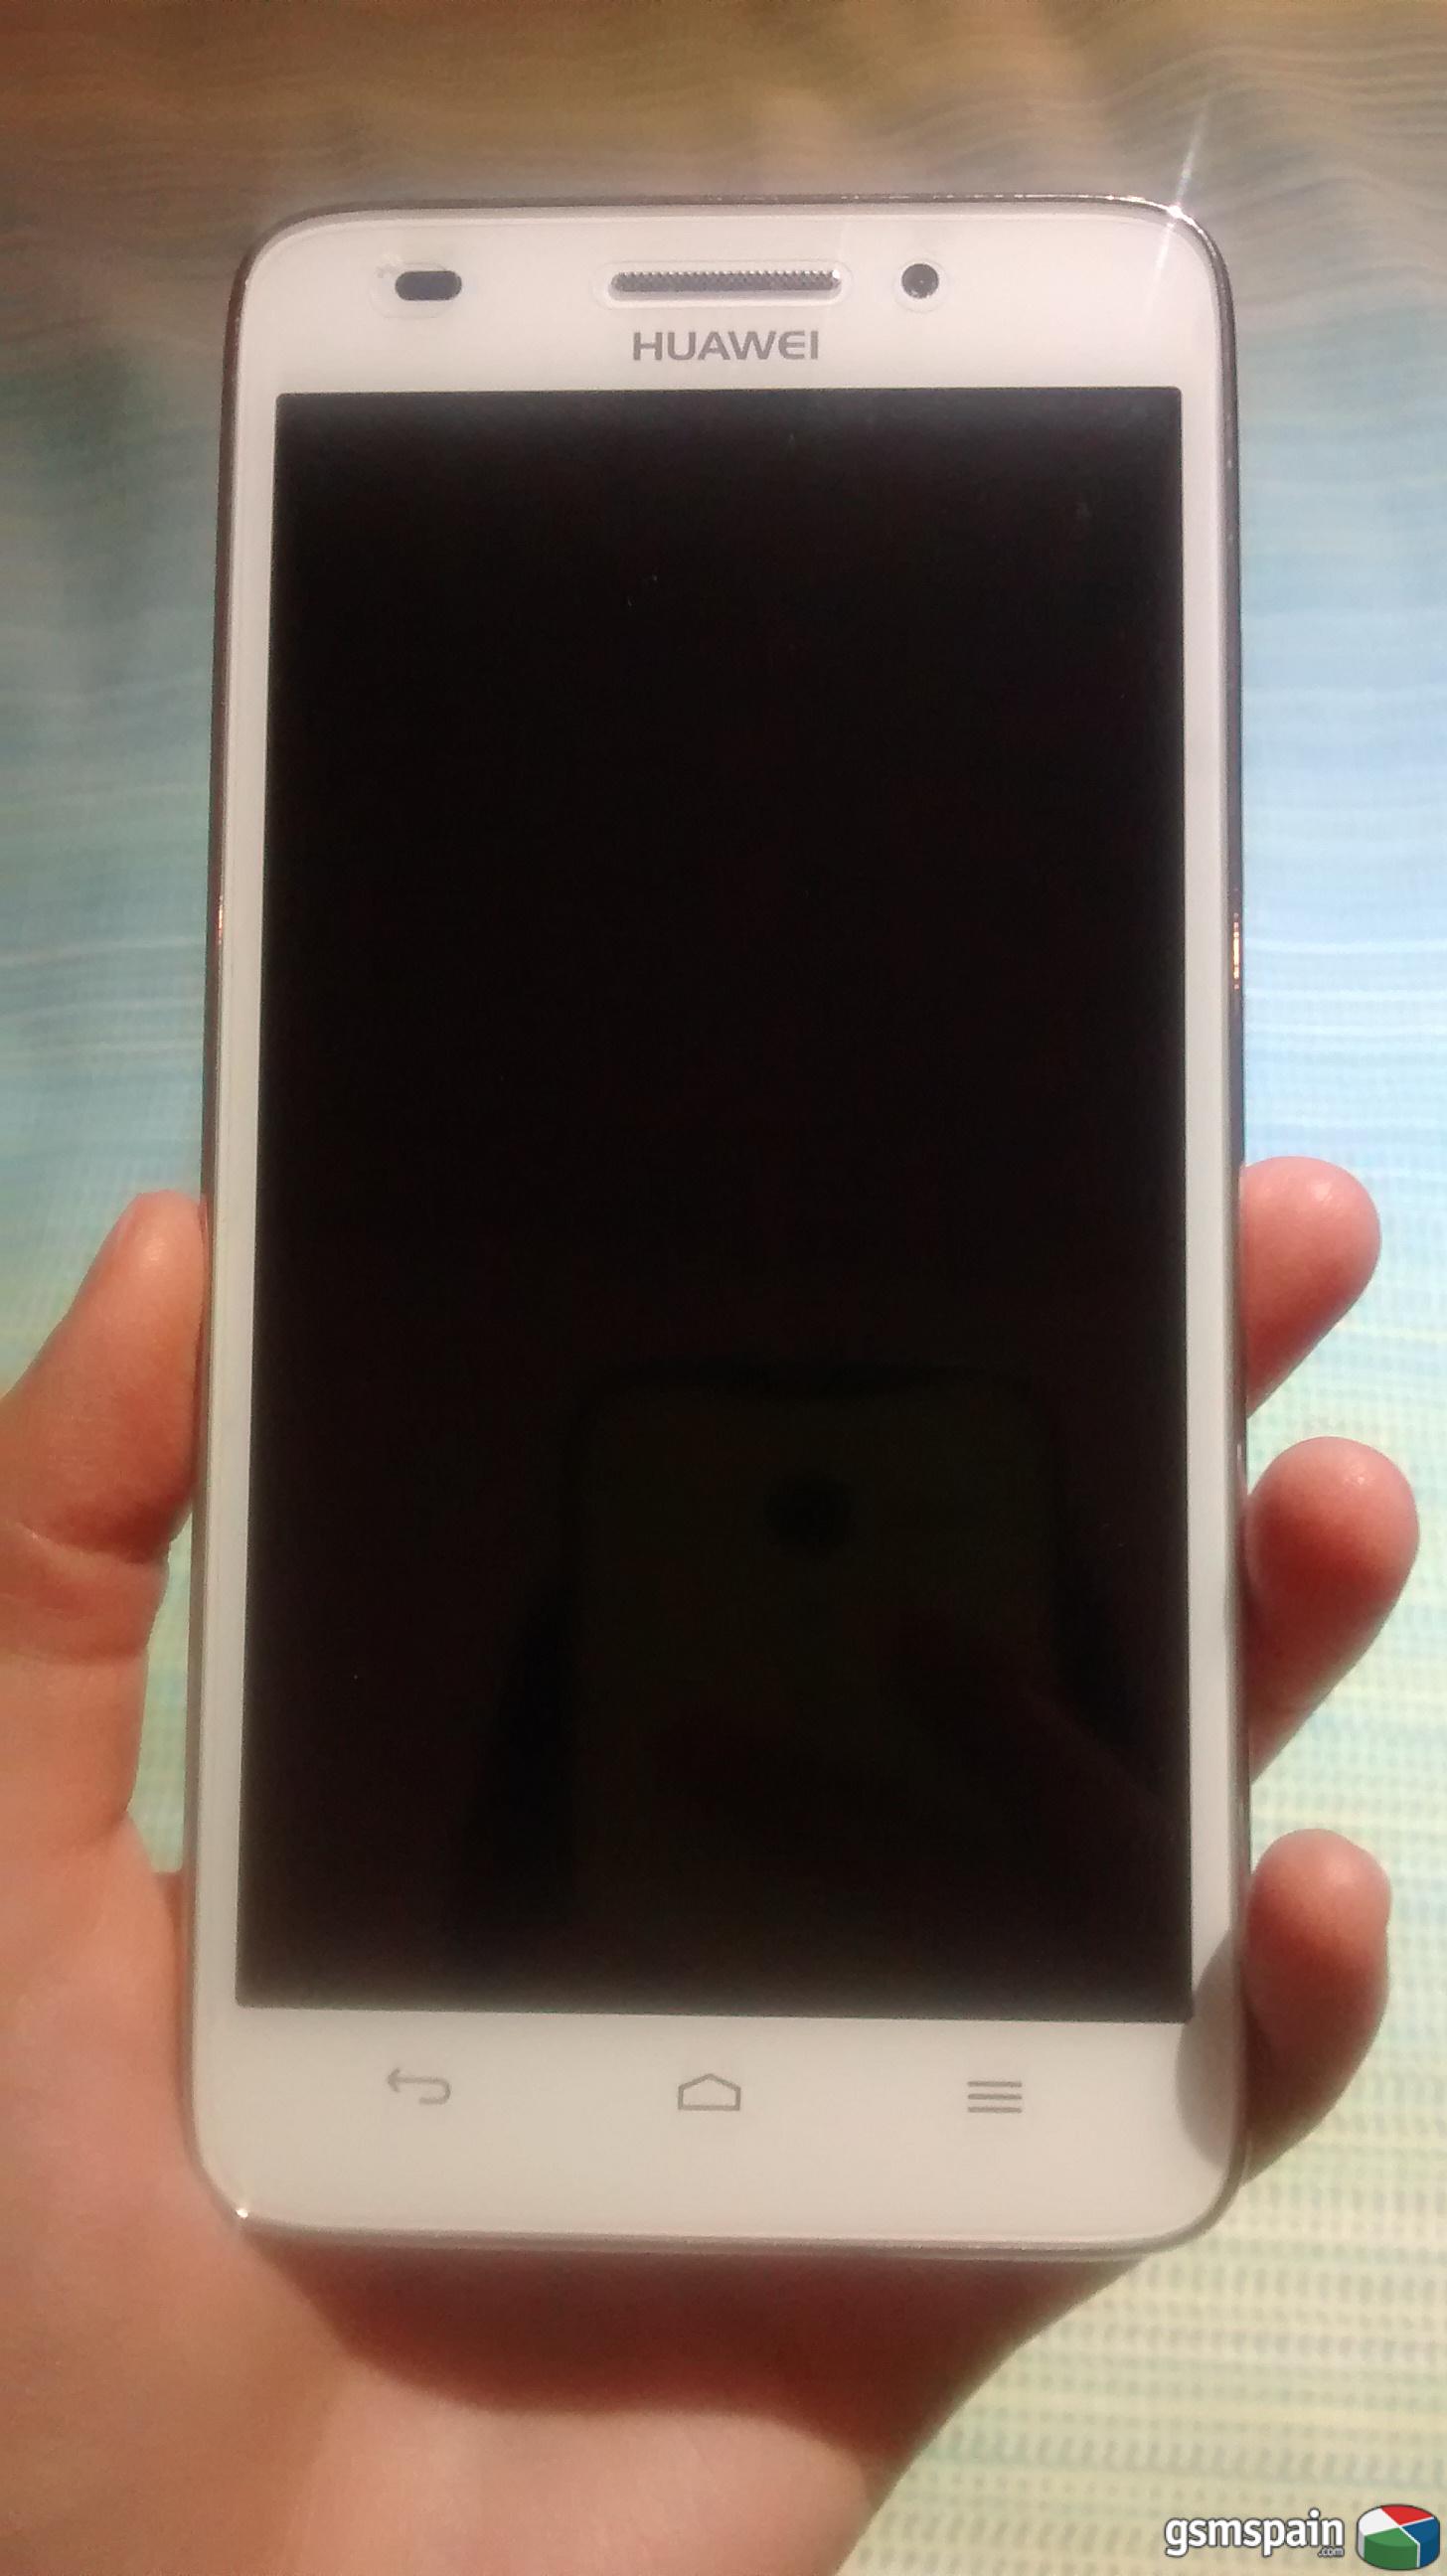 [VENDO] Huawei g620s como nuevo